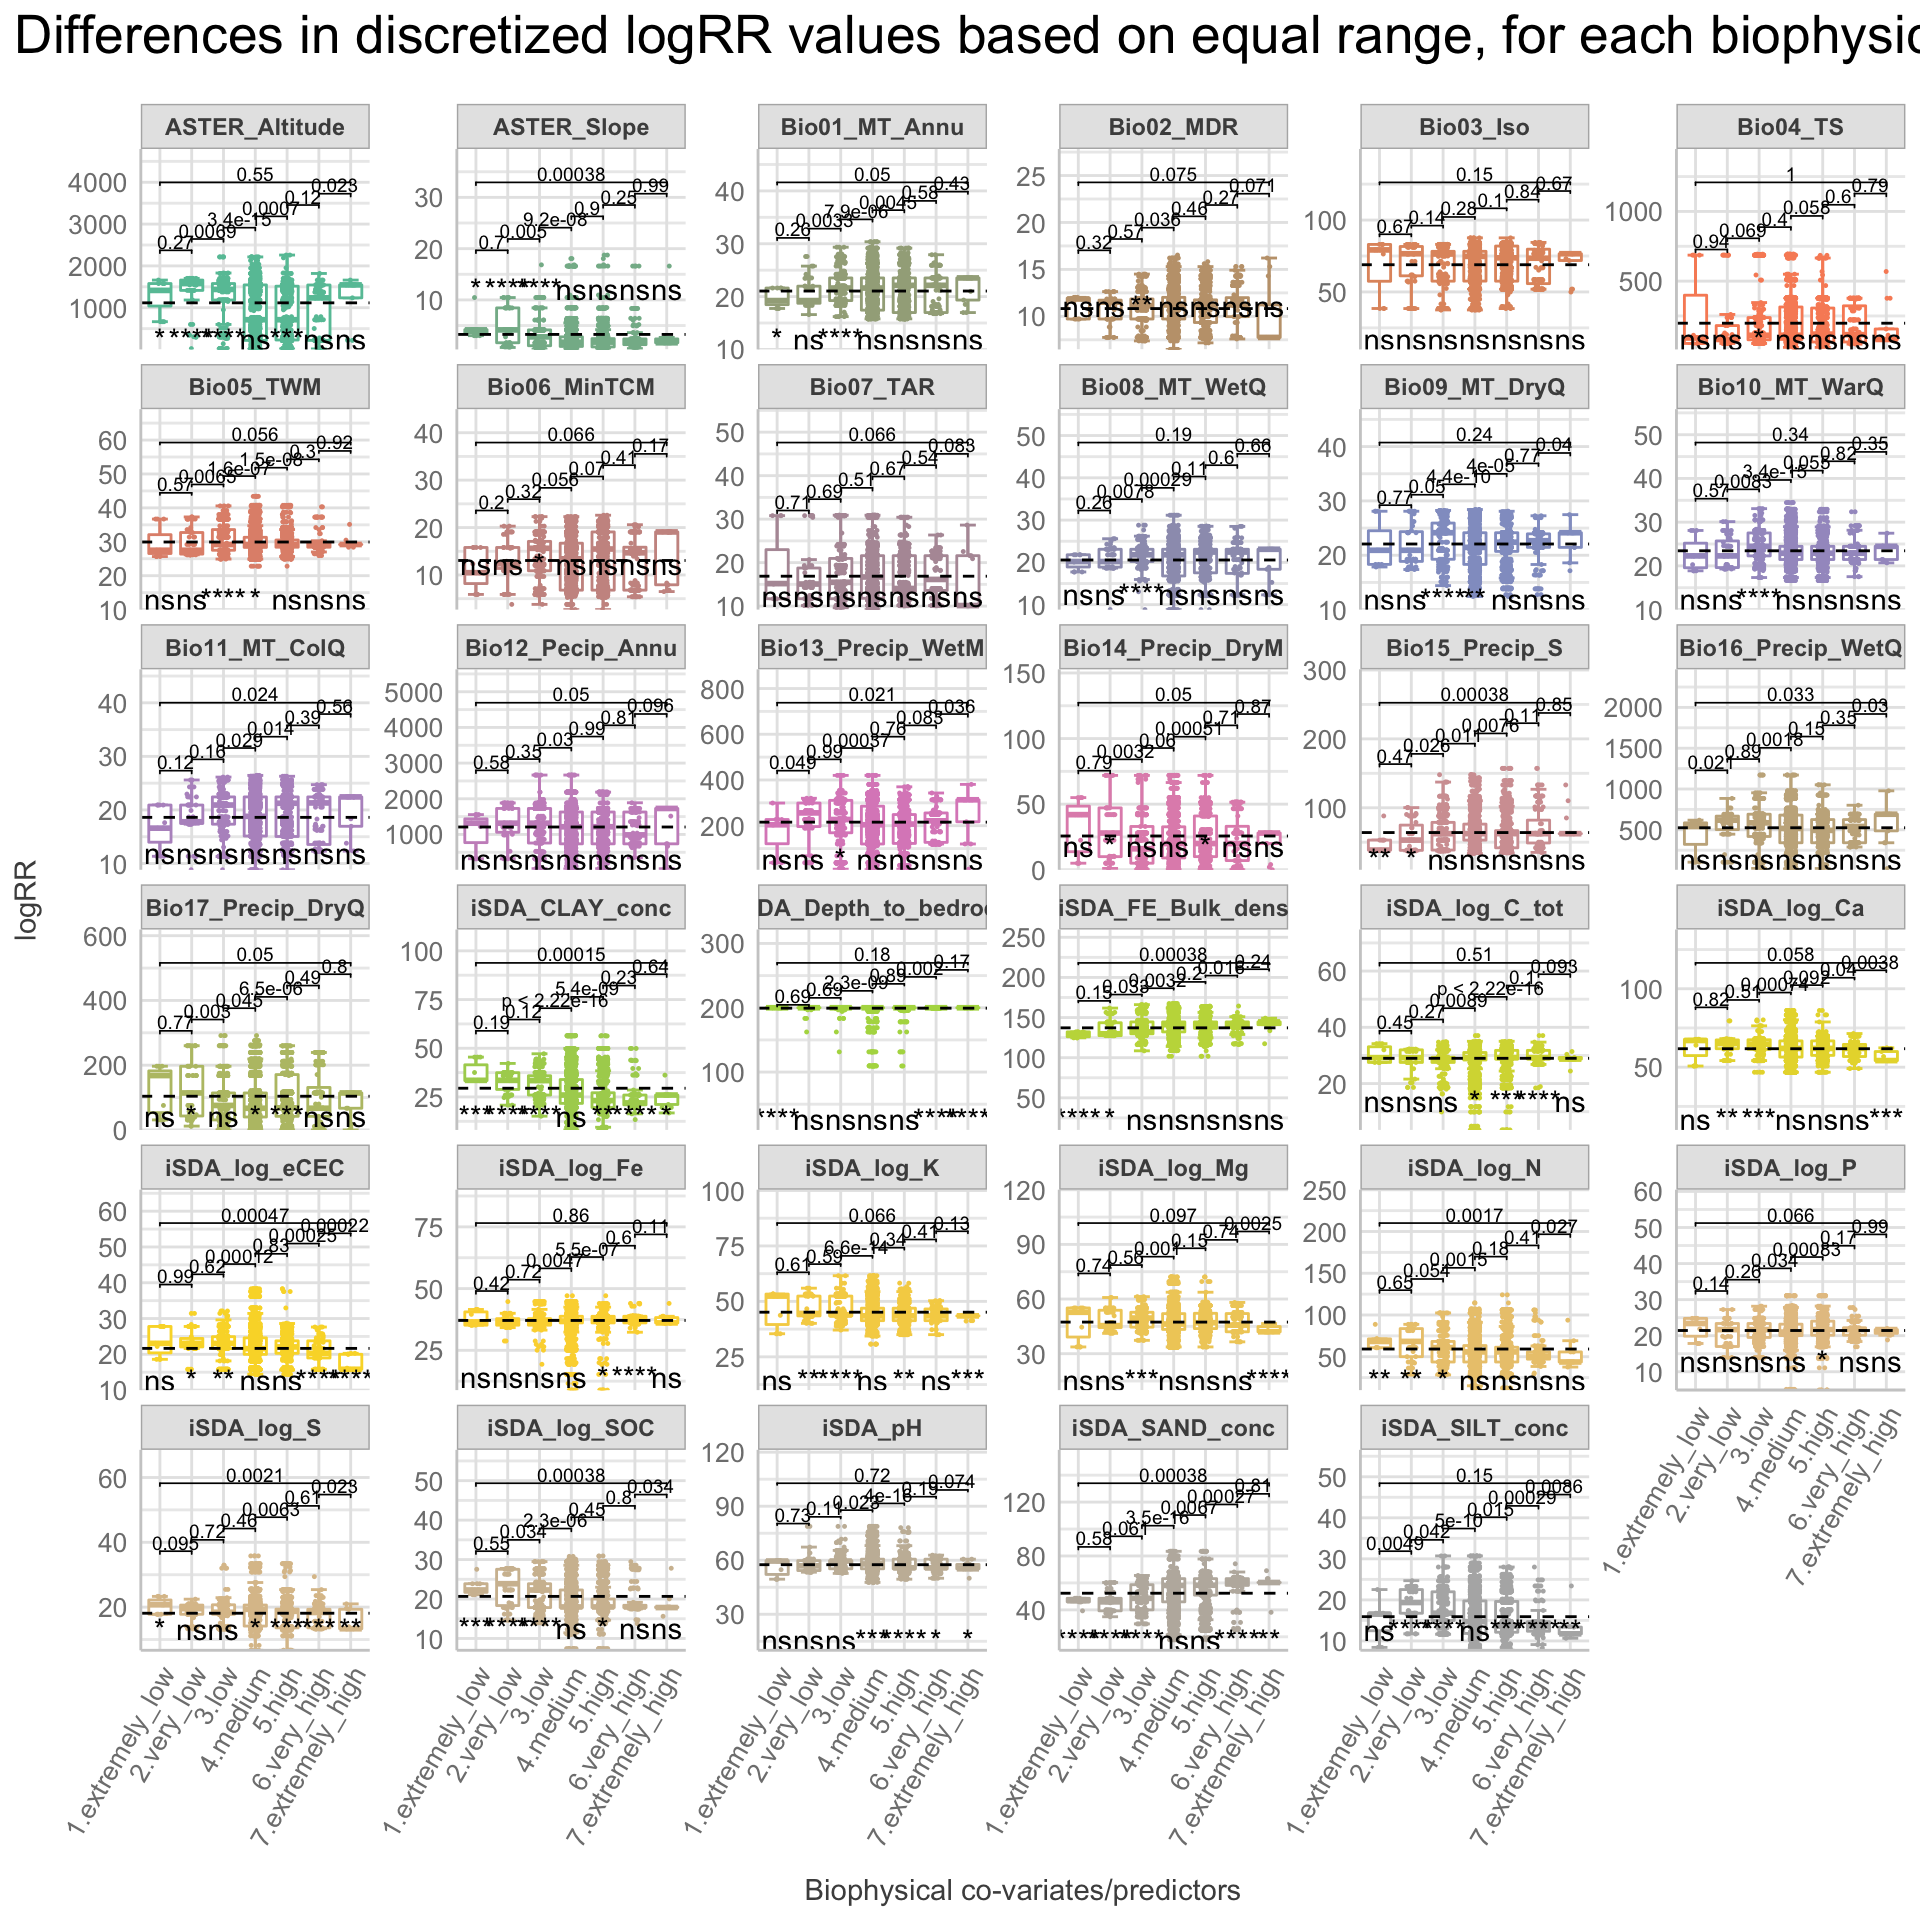 Boxplot of equal range discretized logRR vs. biophysical predictors